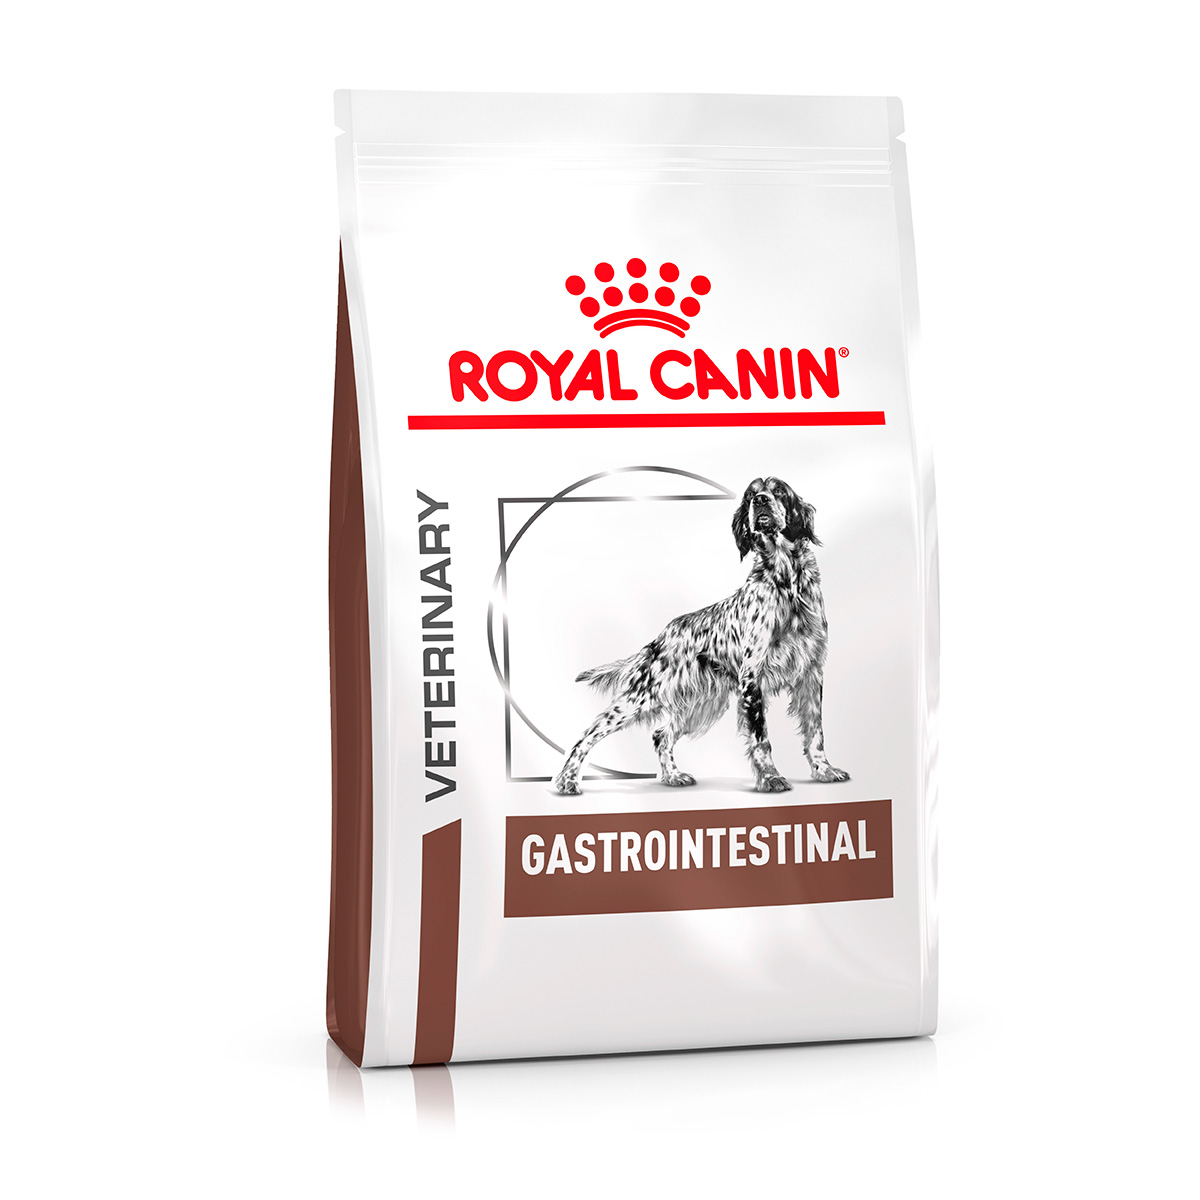 ROYAL CANIN® Veterinary GASTROINTESTINAL Trockenfutter für Hunde 2kg von Royal Canin